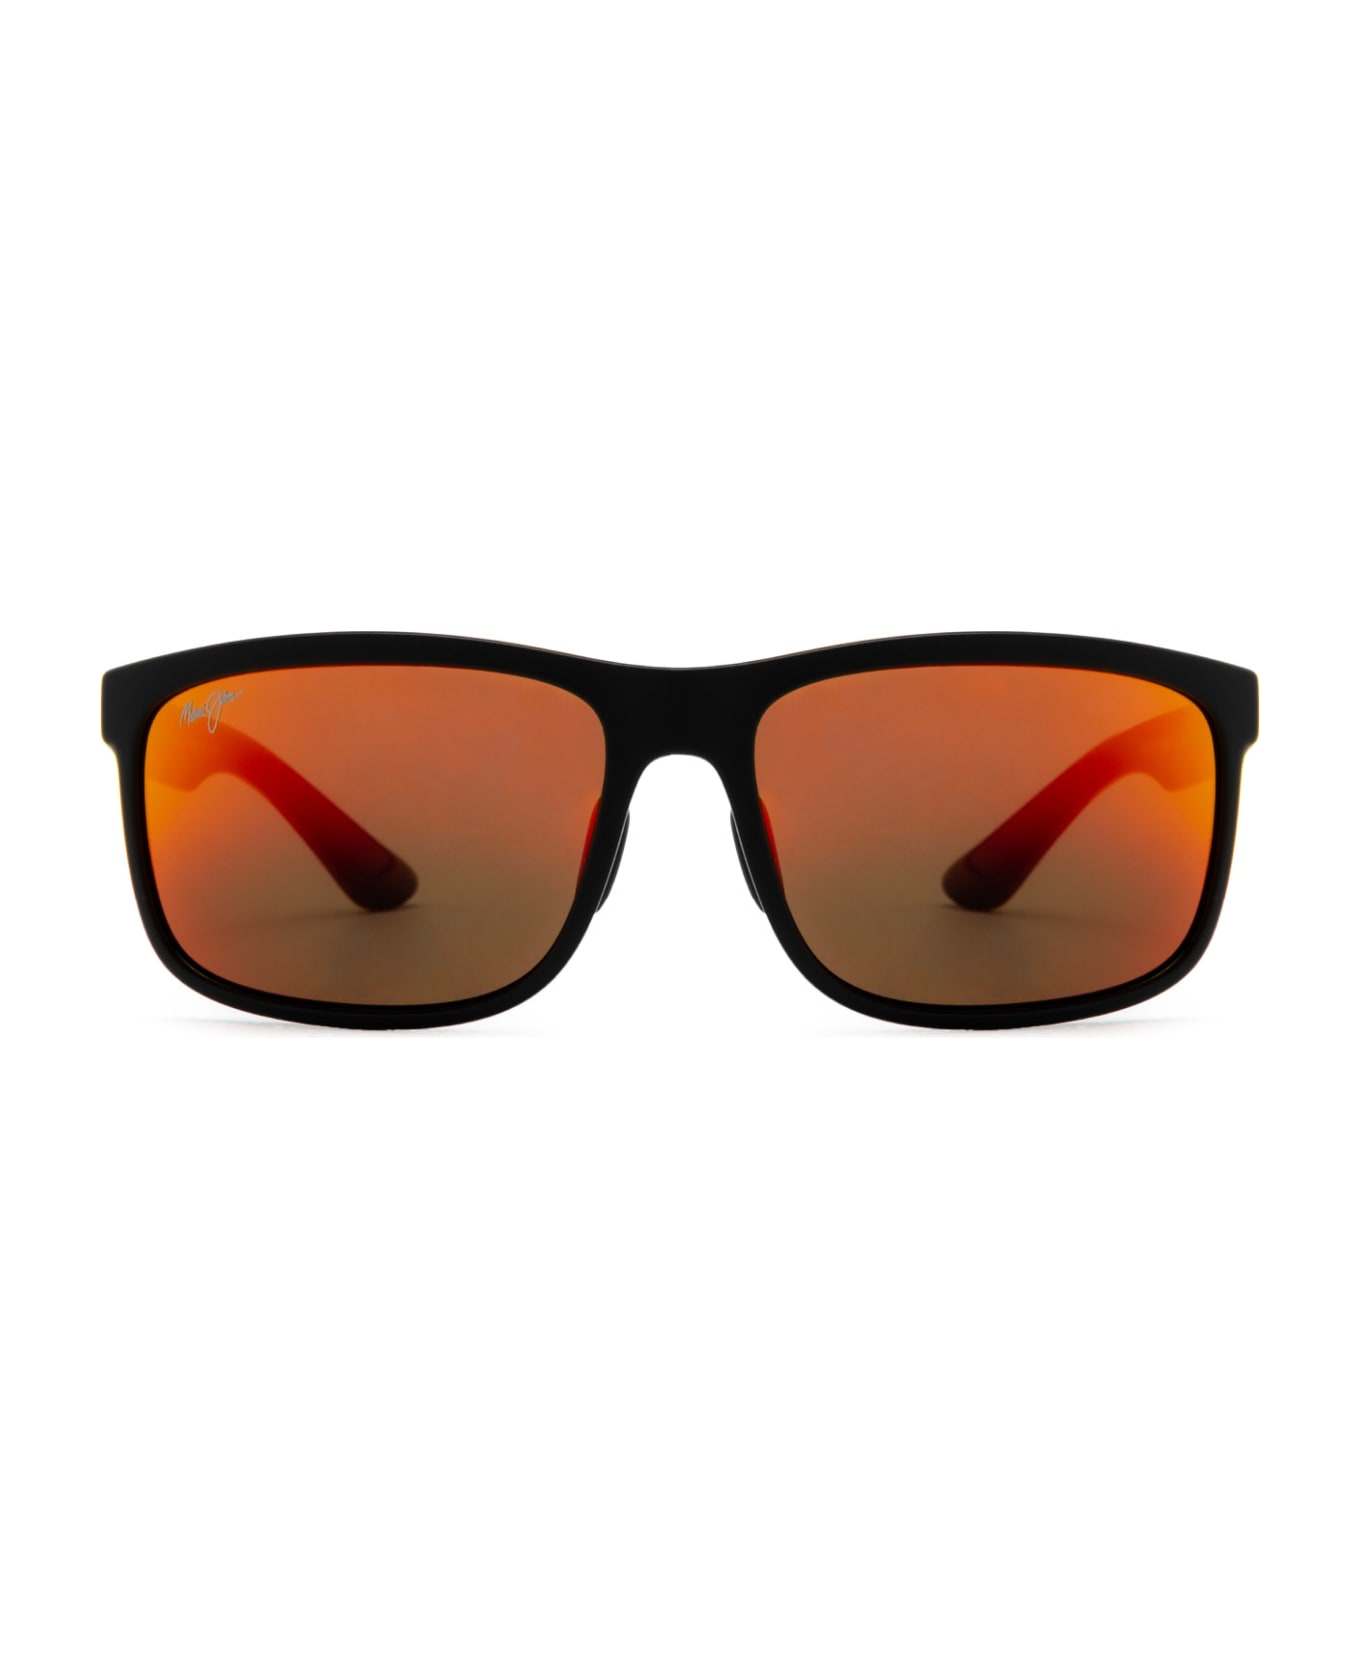 Maui Jim Mj449 Matte Black Sunglasses - Matte Black サングラス